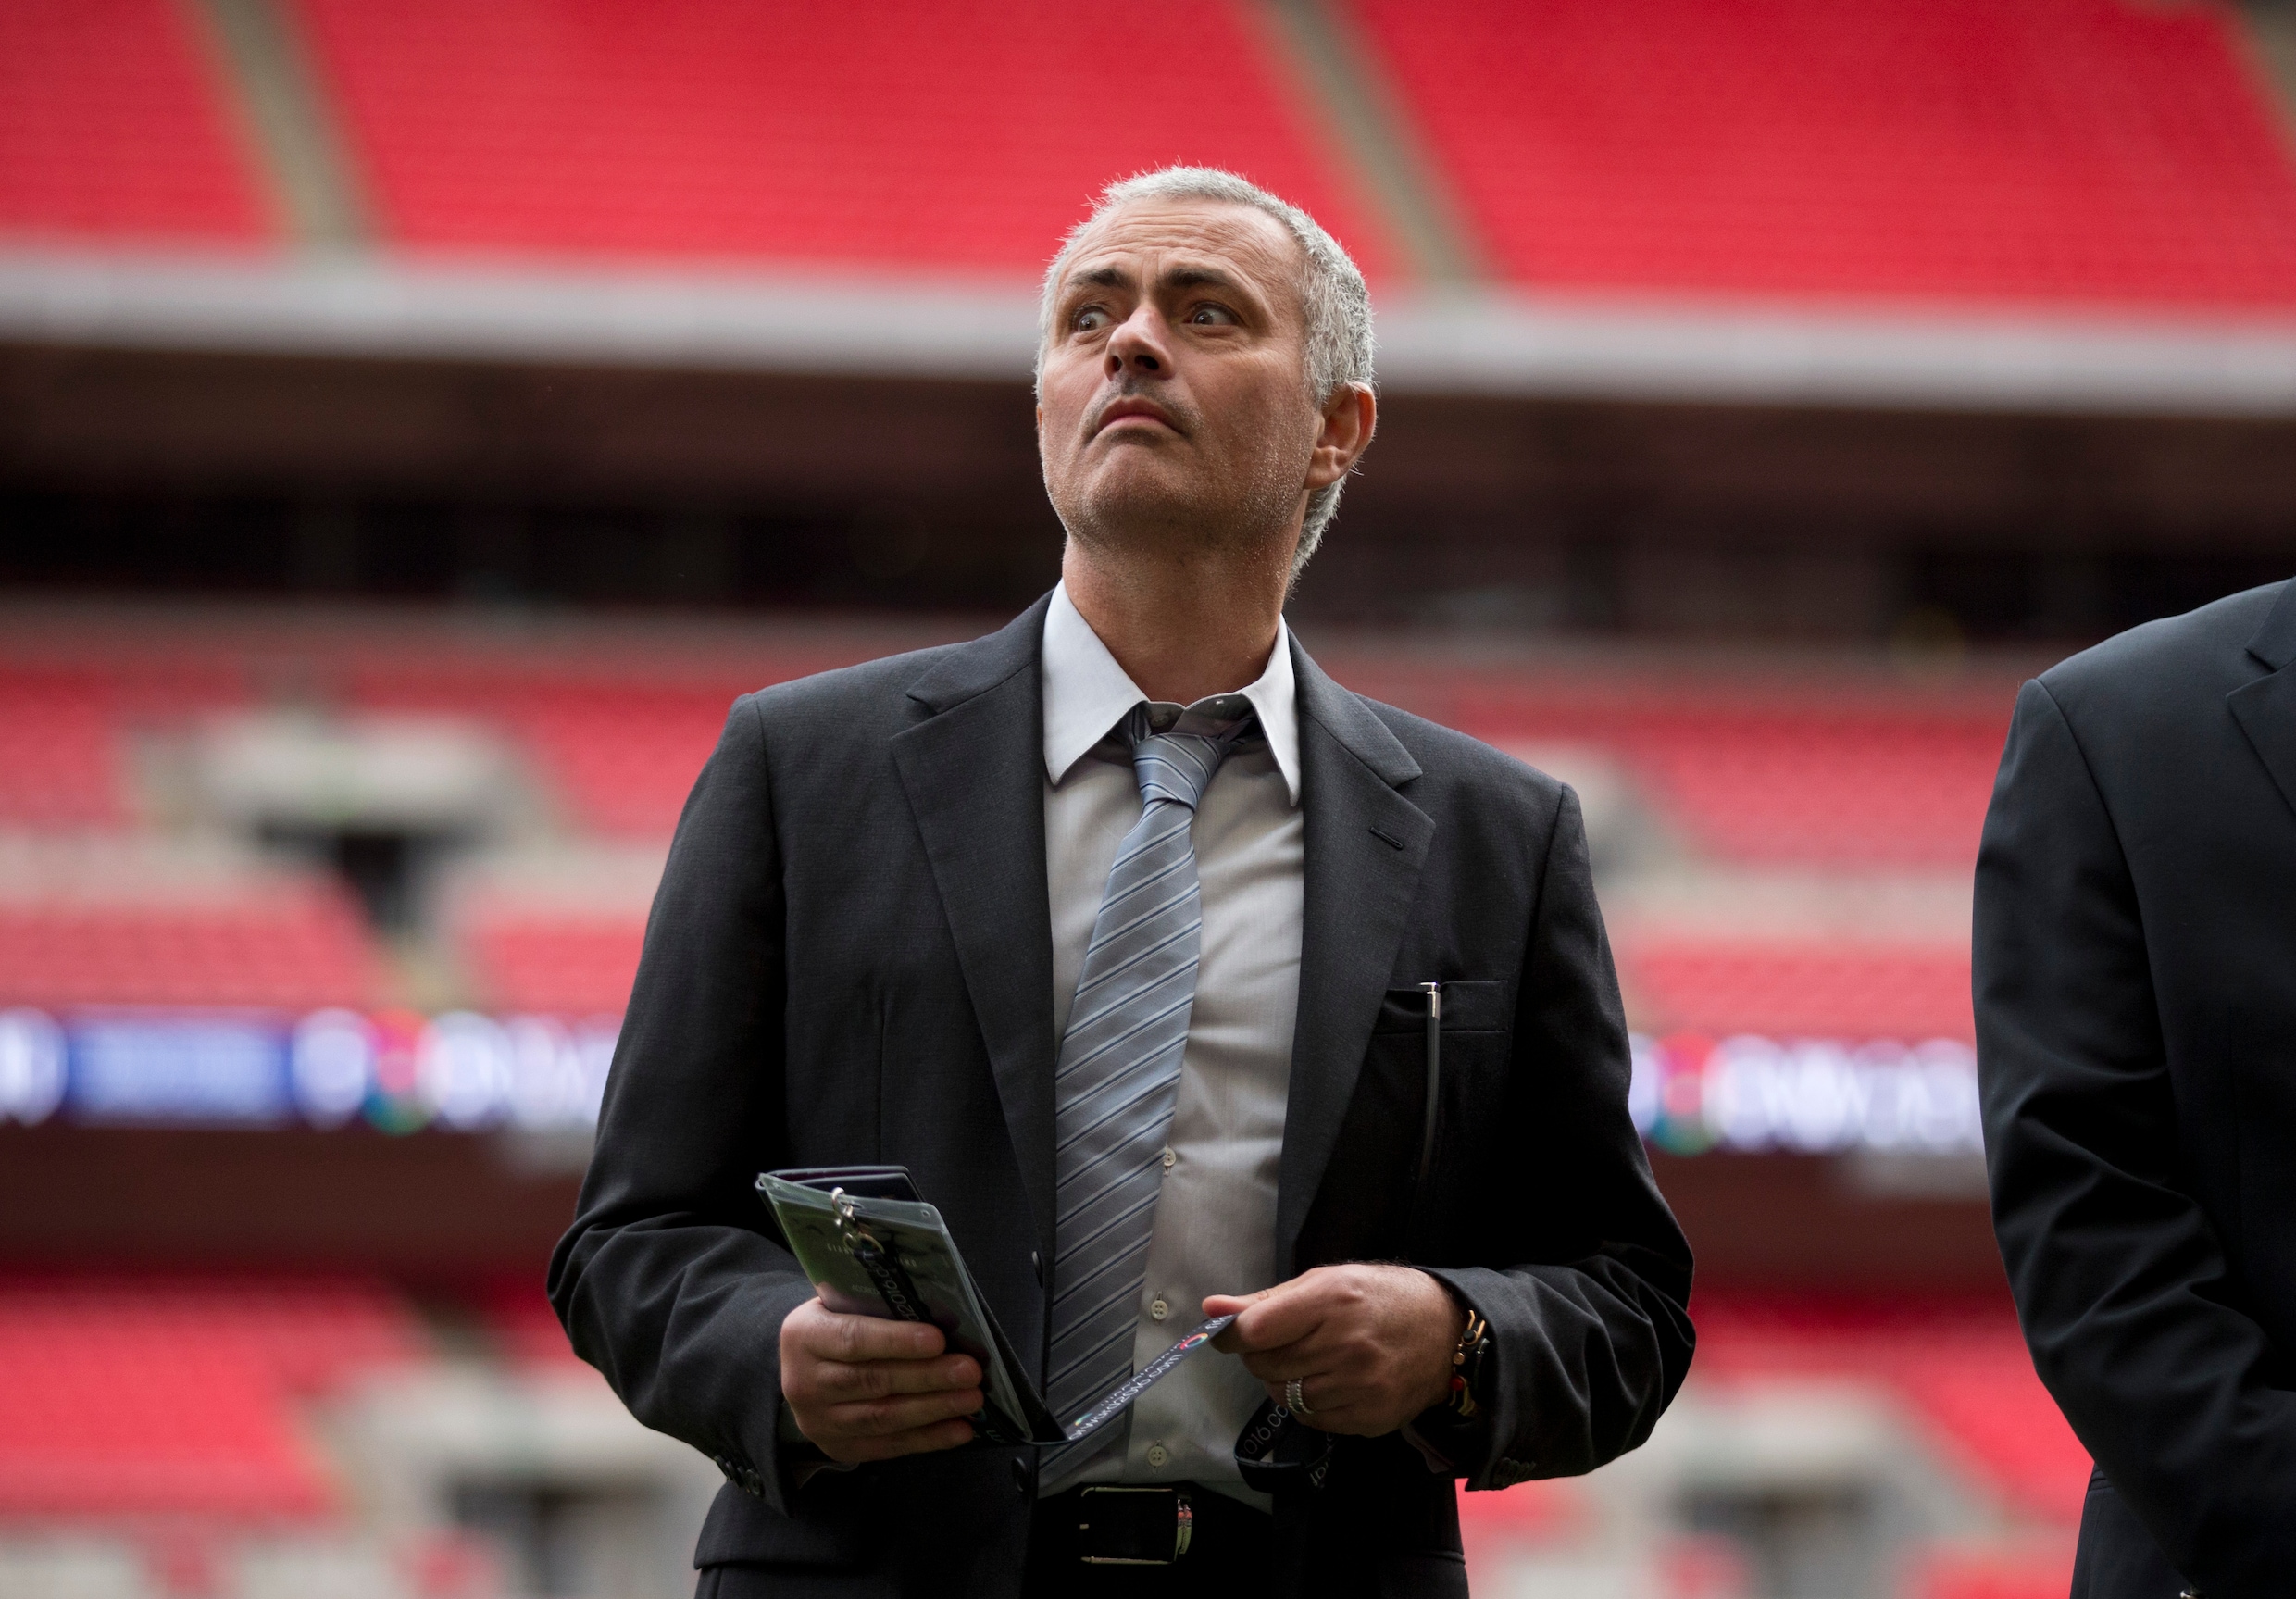 Terminator José Mourinho doorbreekt de stilte: "I'll be back (soon)"